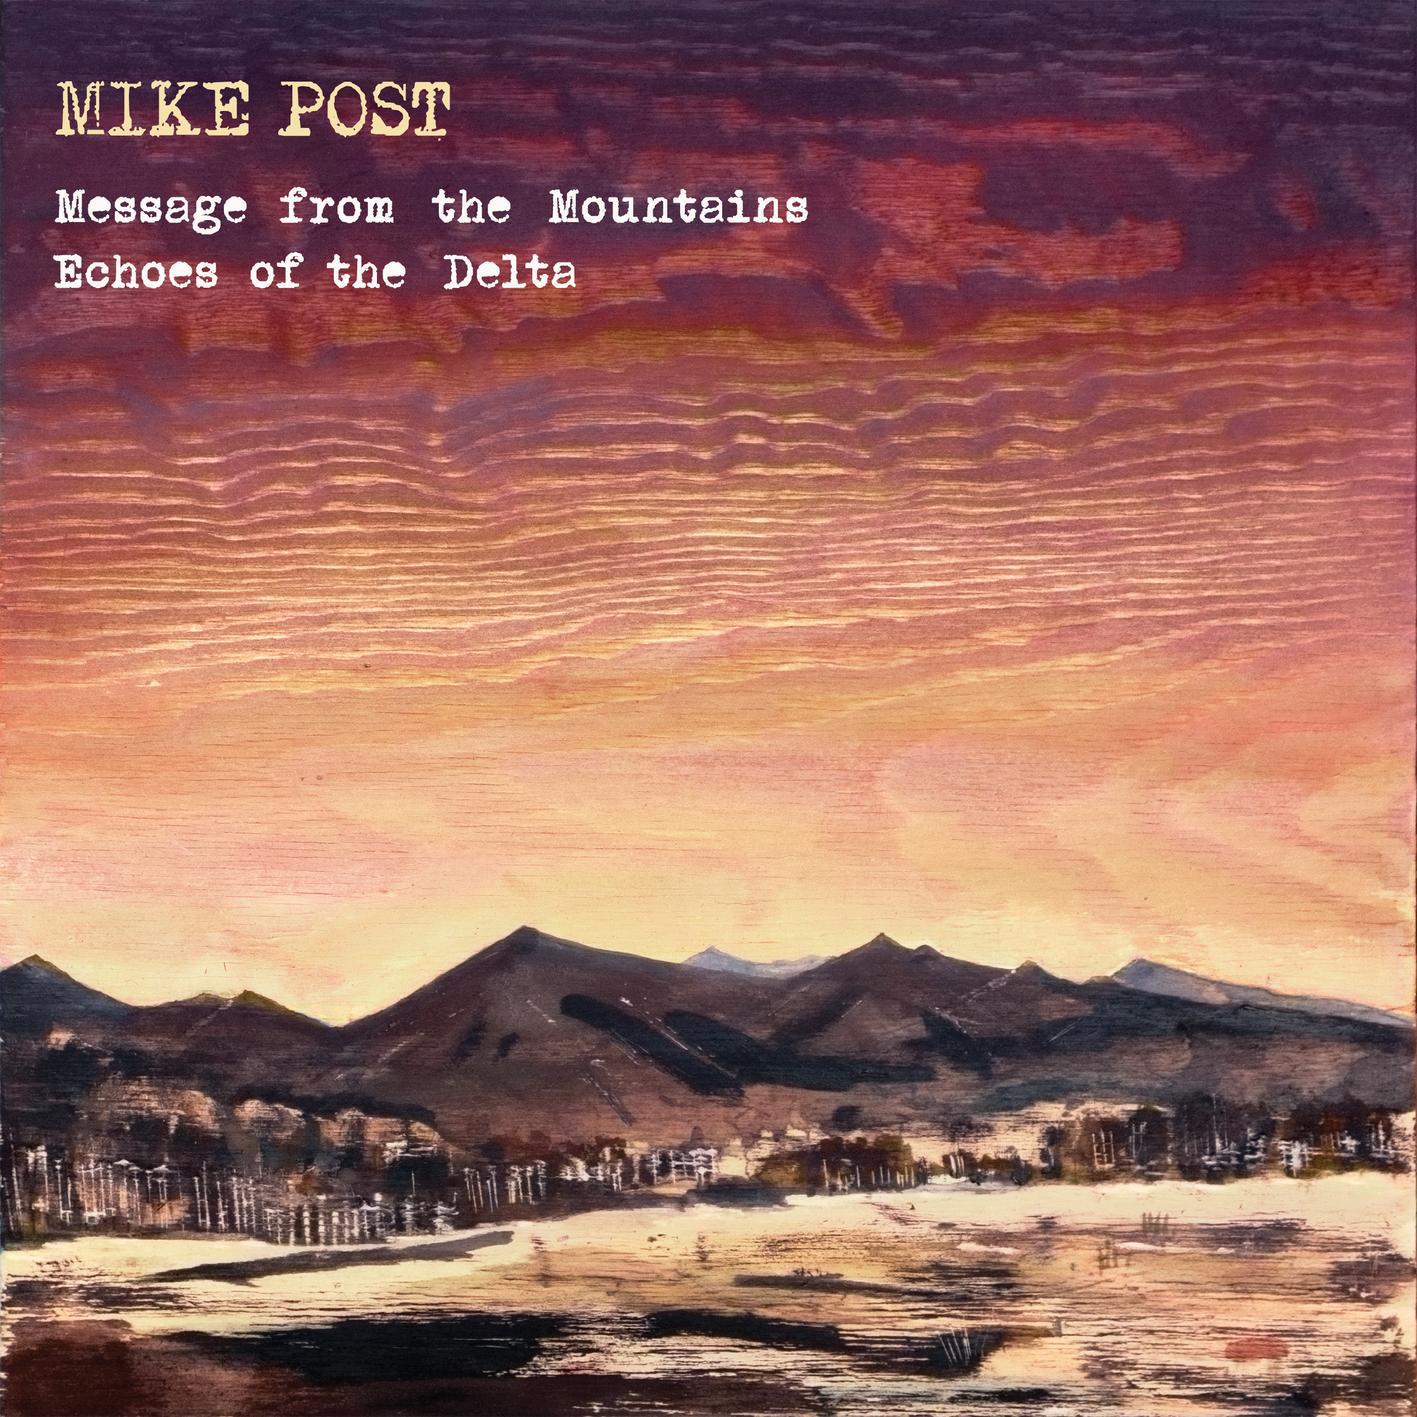 Mike Post - Echoes of the Delta:I. John the Revelator